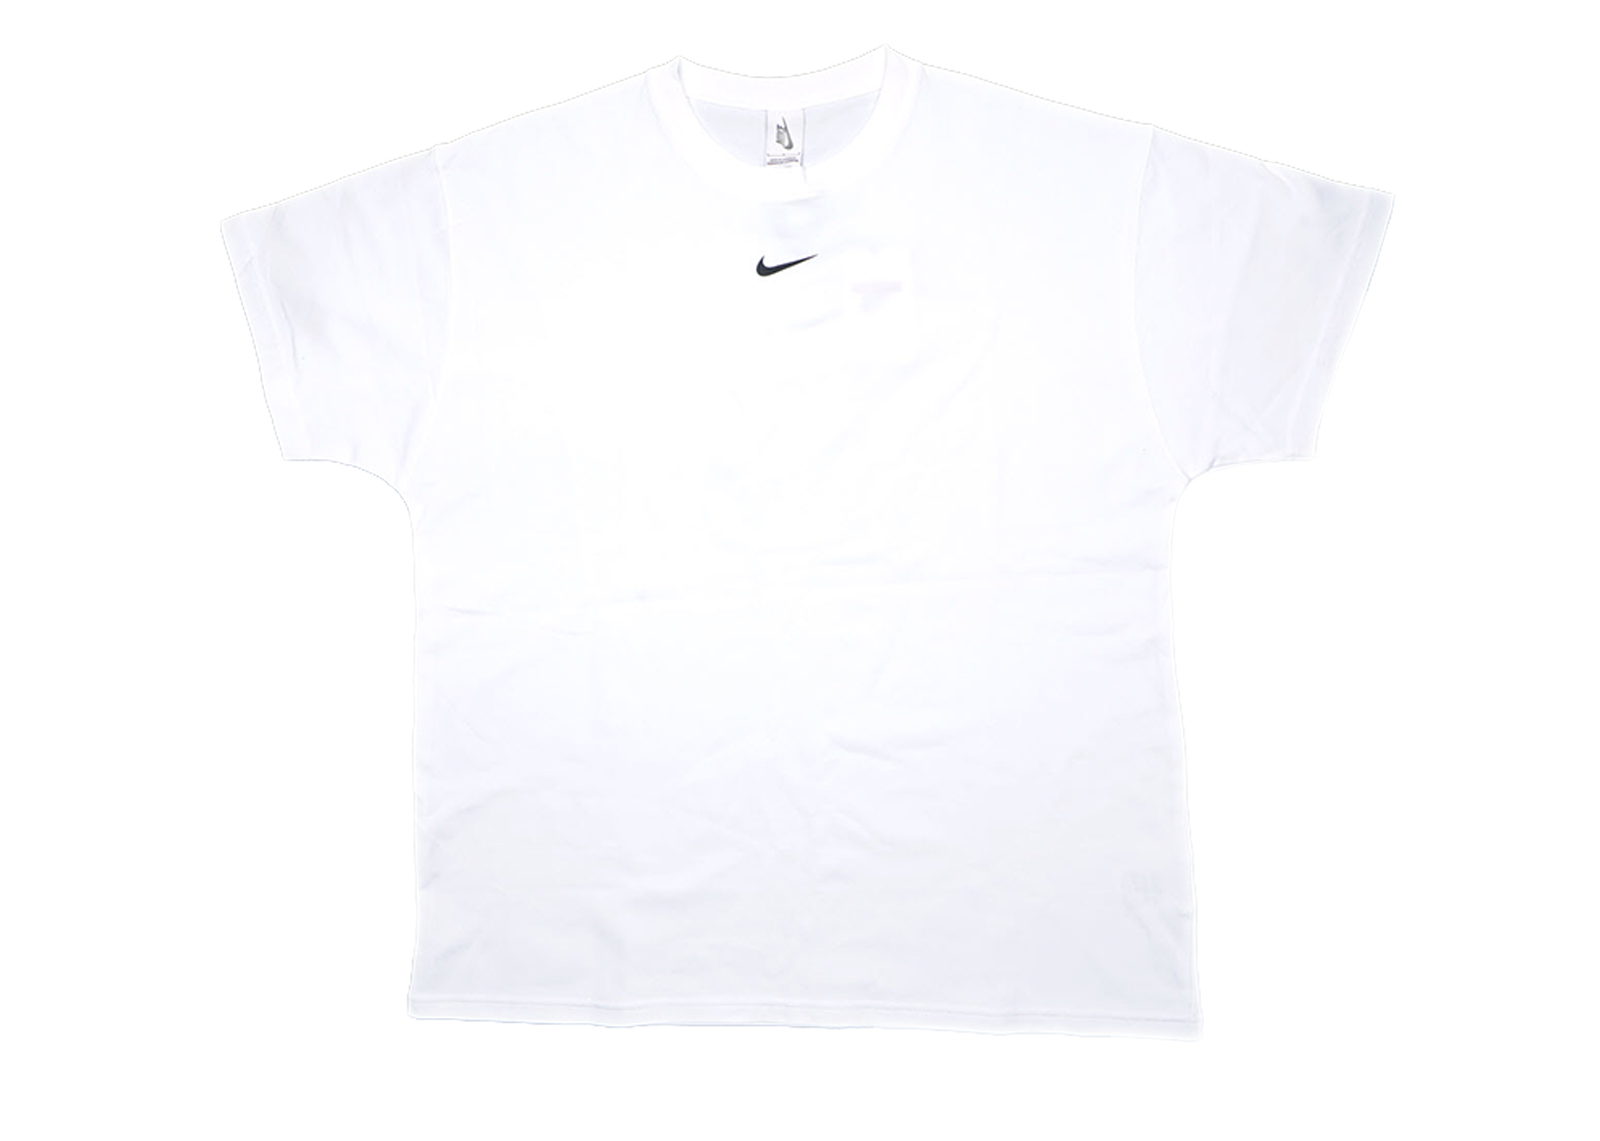 white nike air shirt